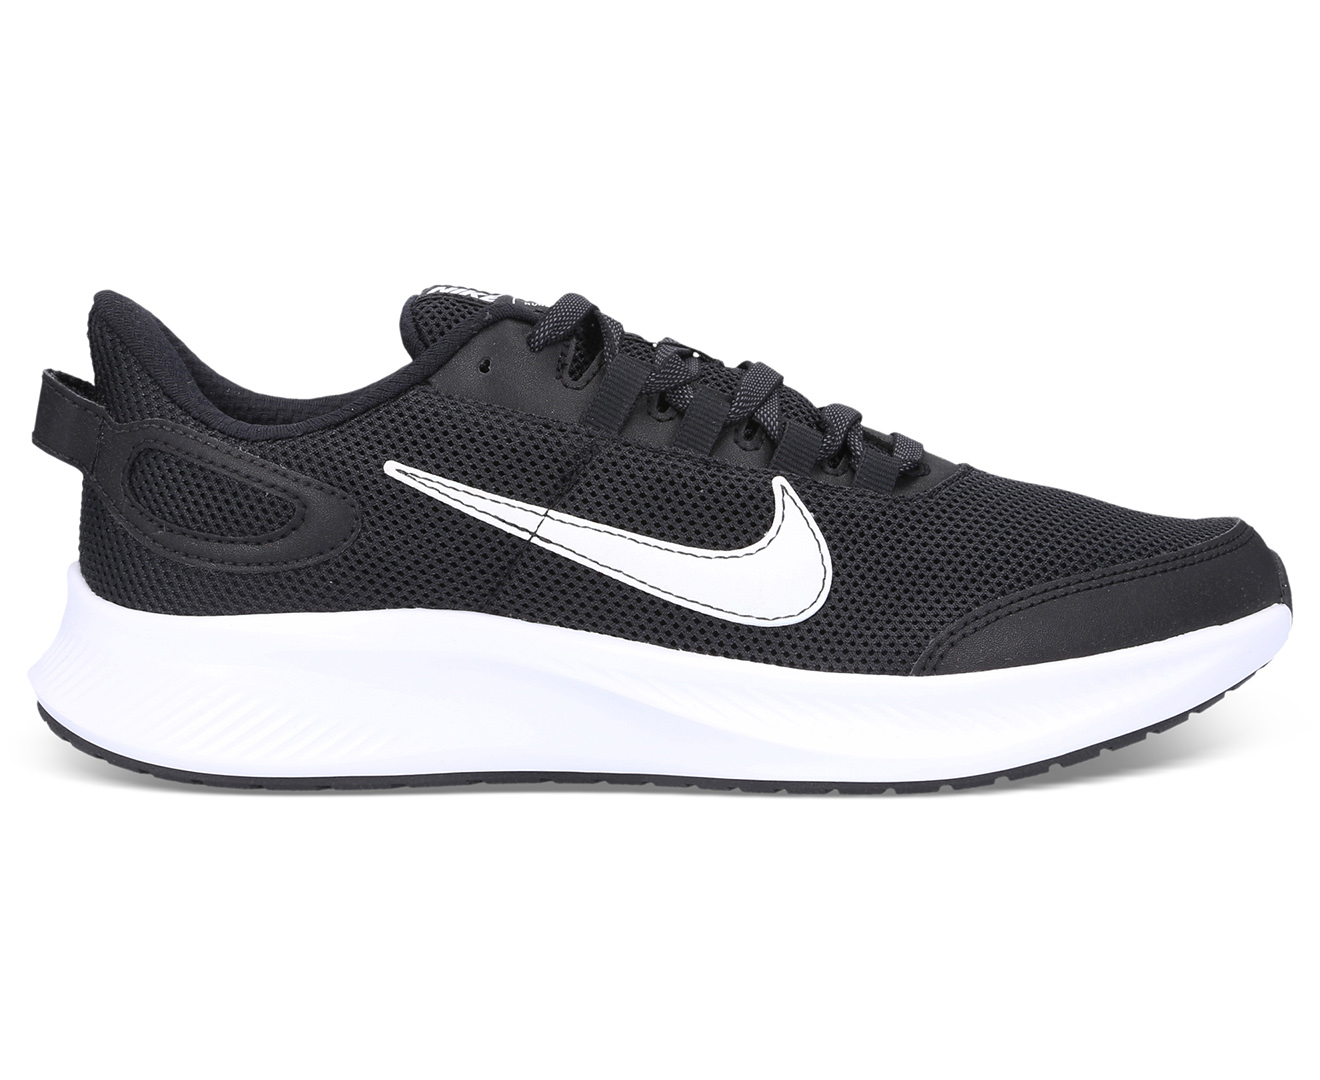 Nike Women's Runallday 2 Running Shoes - Black/Iron Grey/White | Catch ...